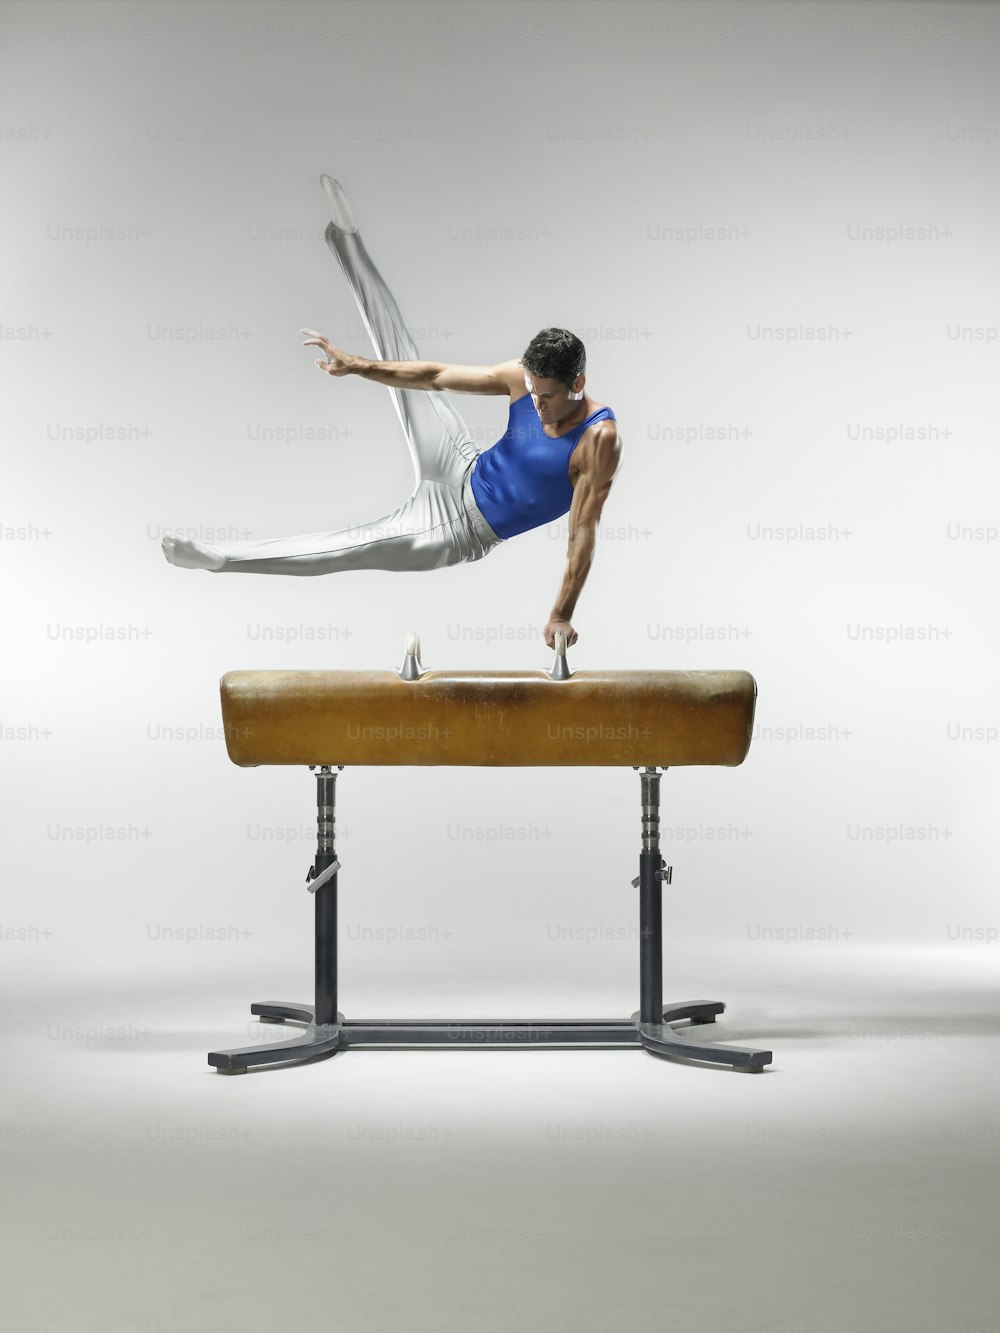 a man is doing a trick on a balance beam